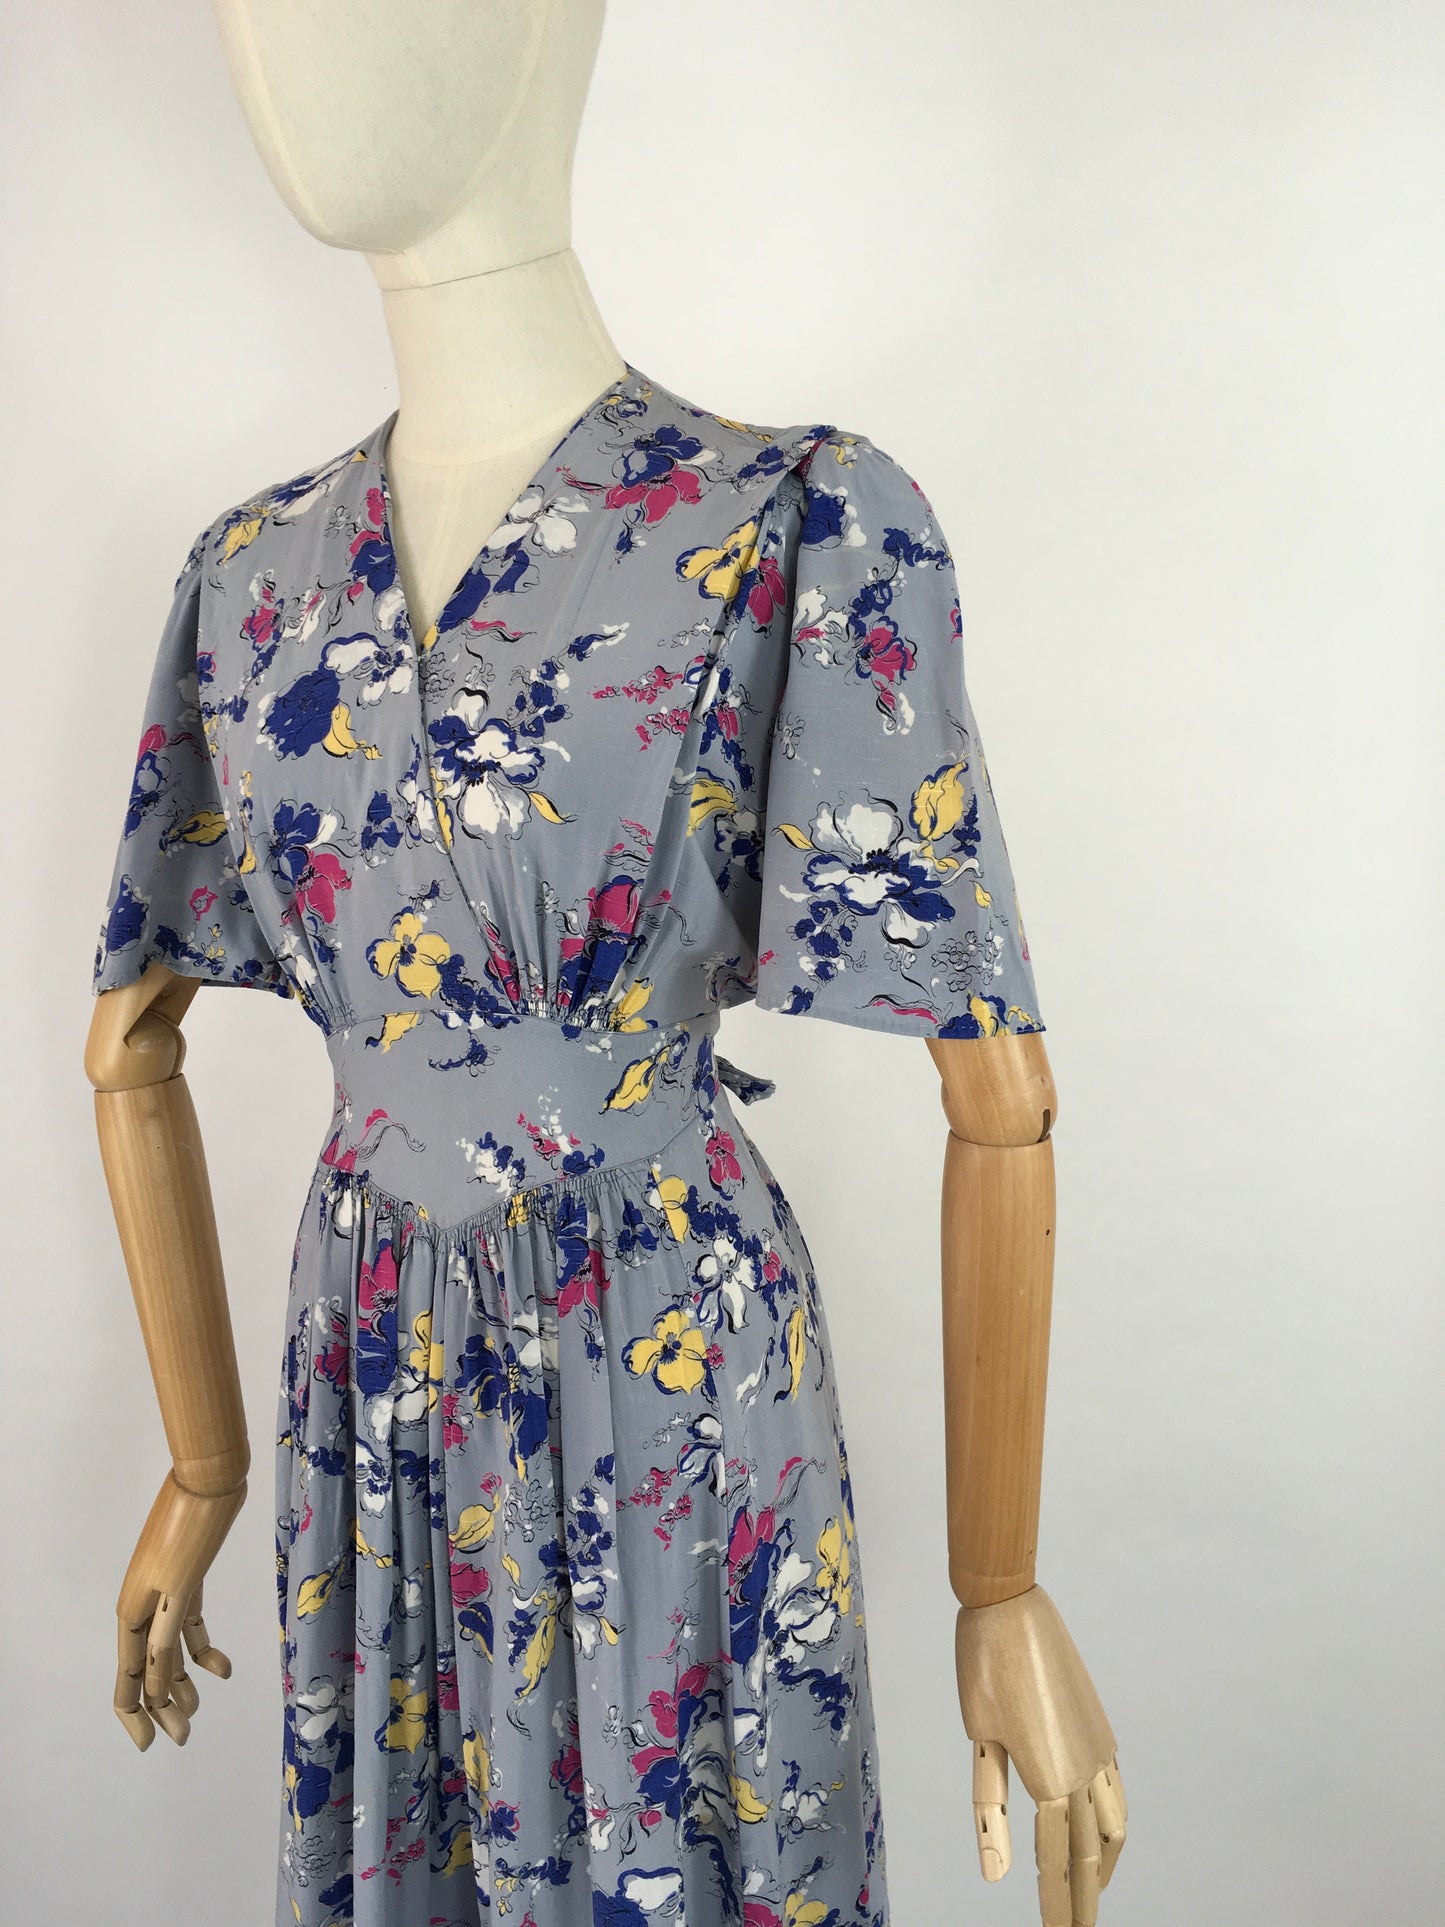 Original 1940s Cornflower Blue Floral Dress - With a Beautiful 40’s Silhouette